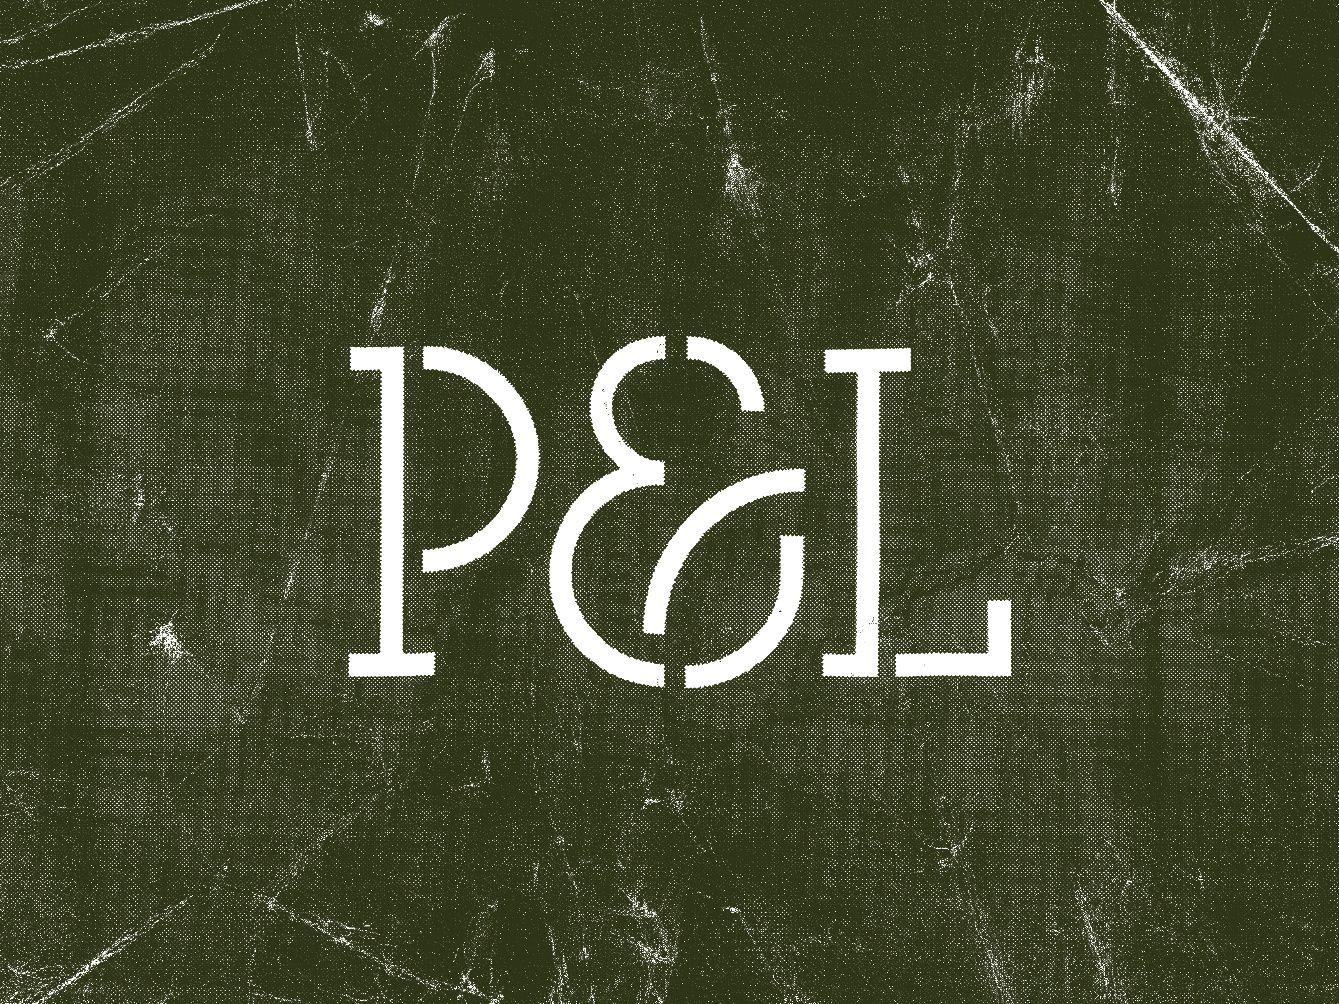 P&L Logo - P&L 1 by Luke D. Schaffner on Dribbble